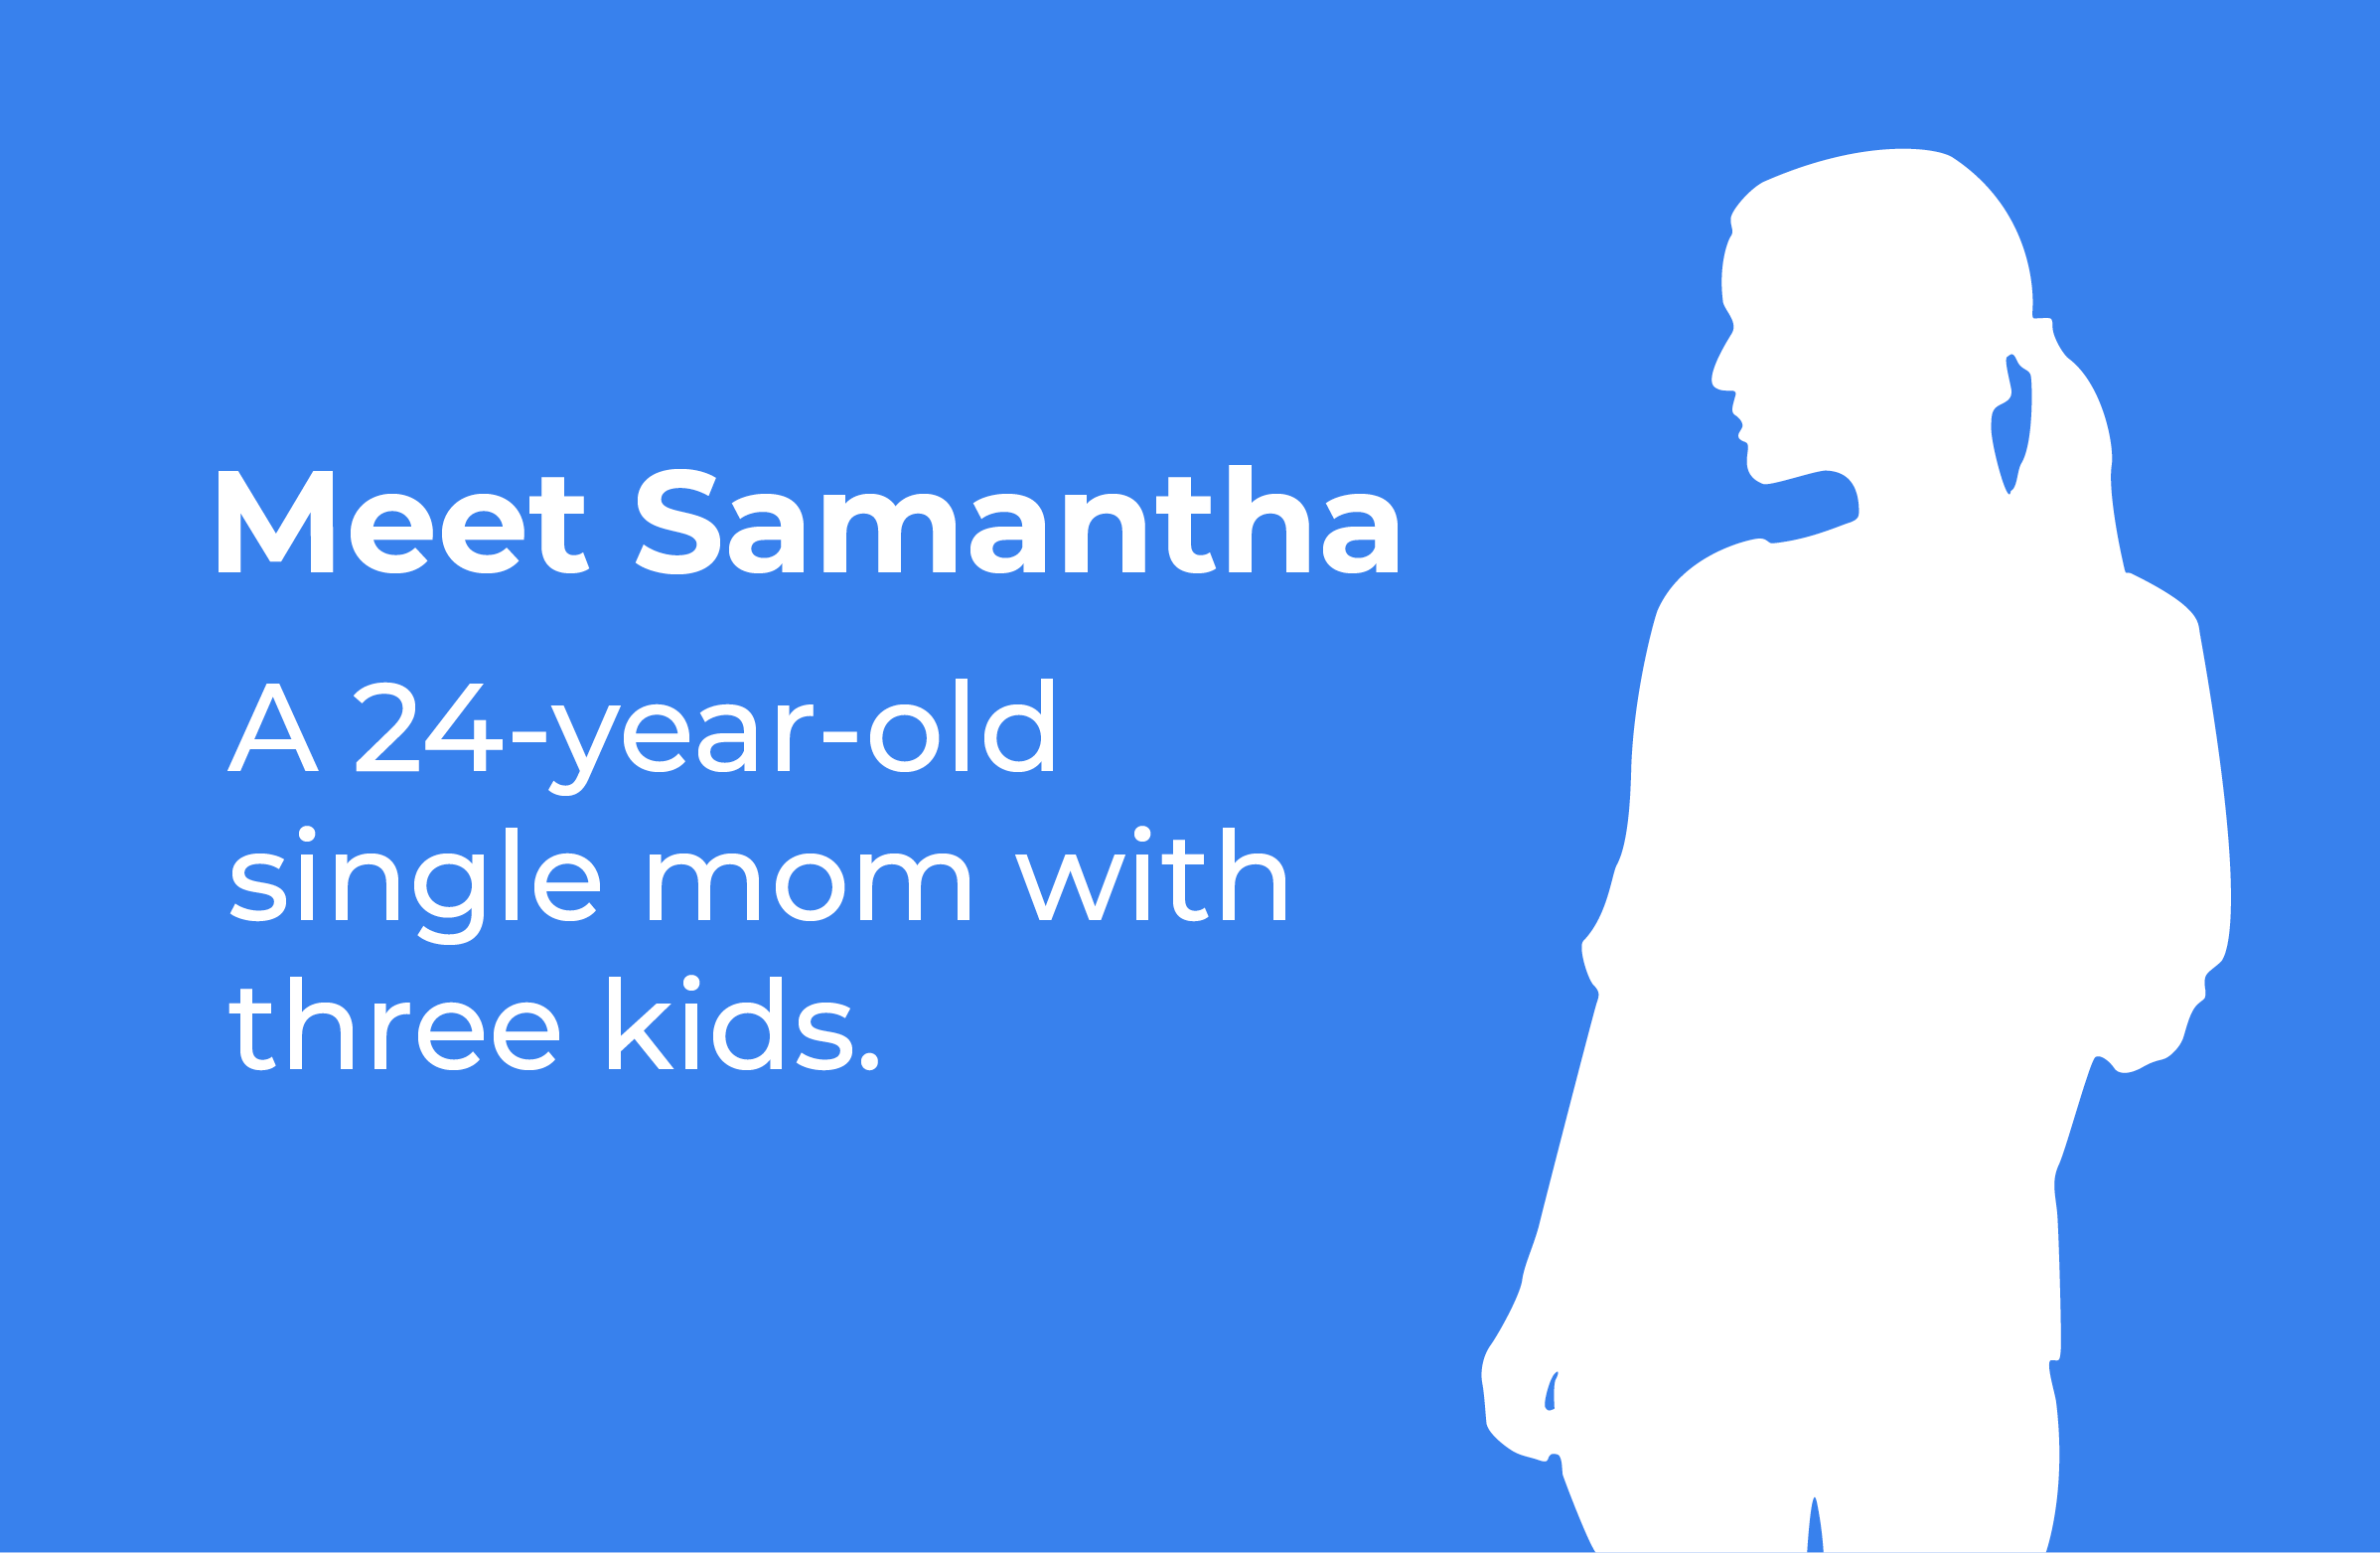 Meet Samantha, a 24-year-old single mom with three kids.